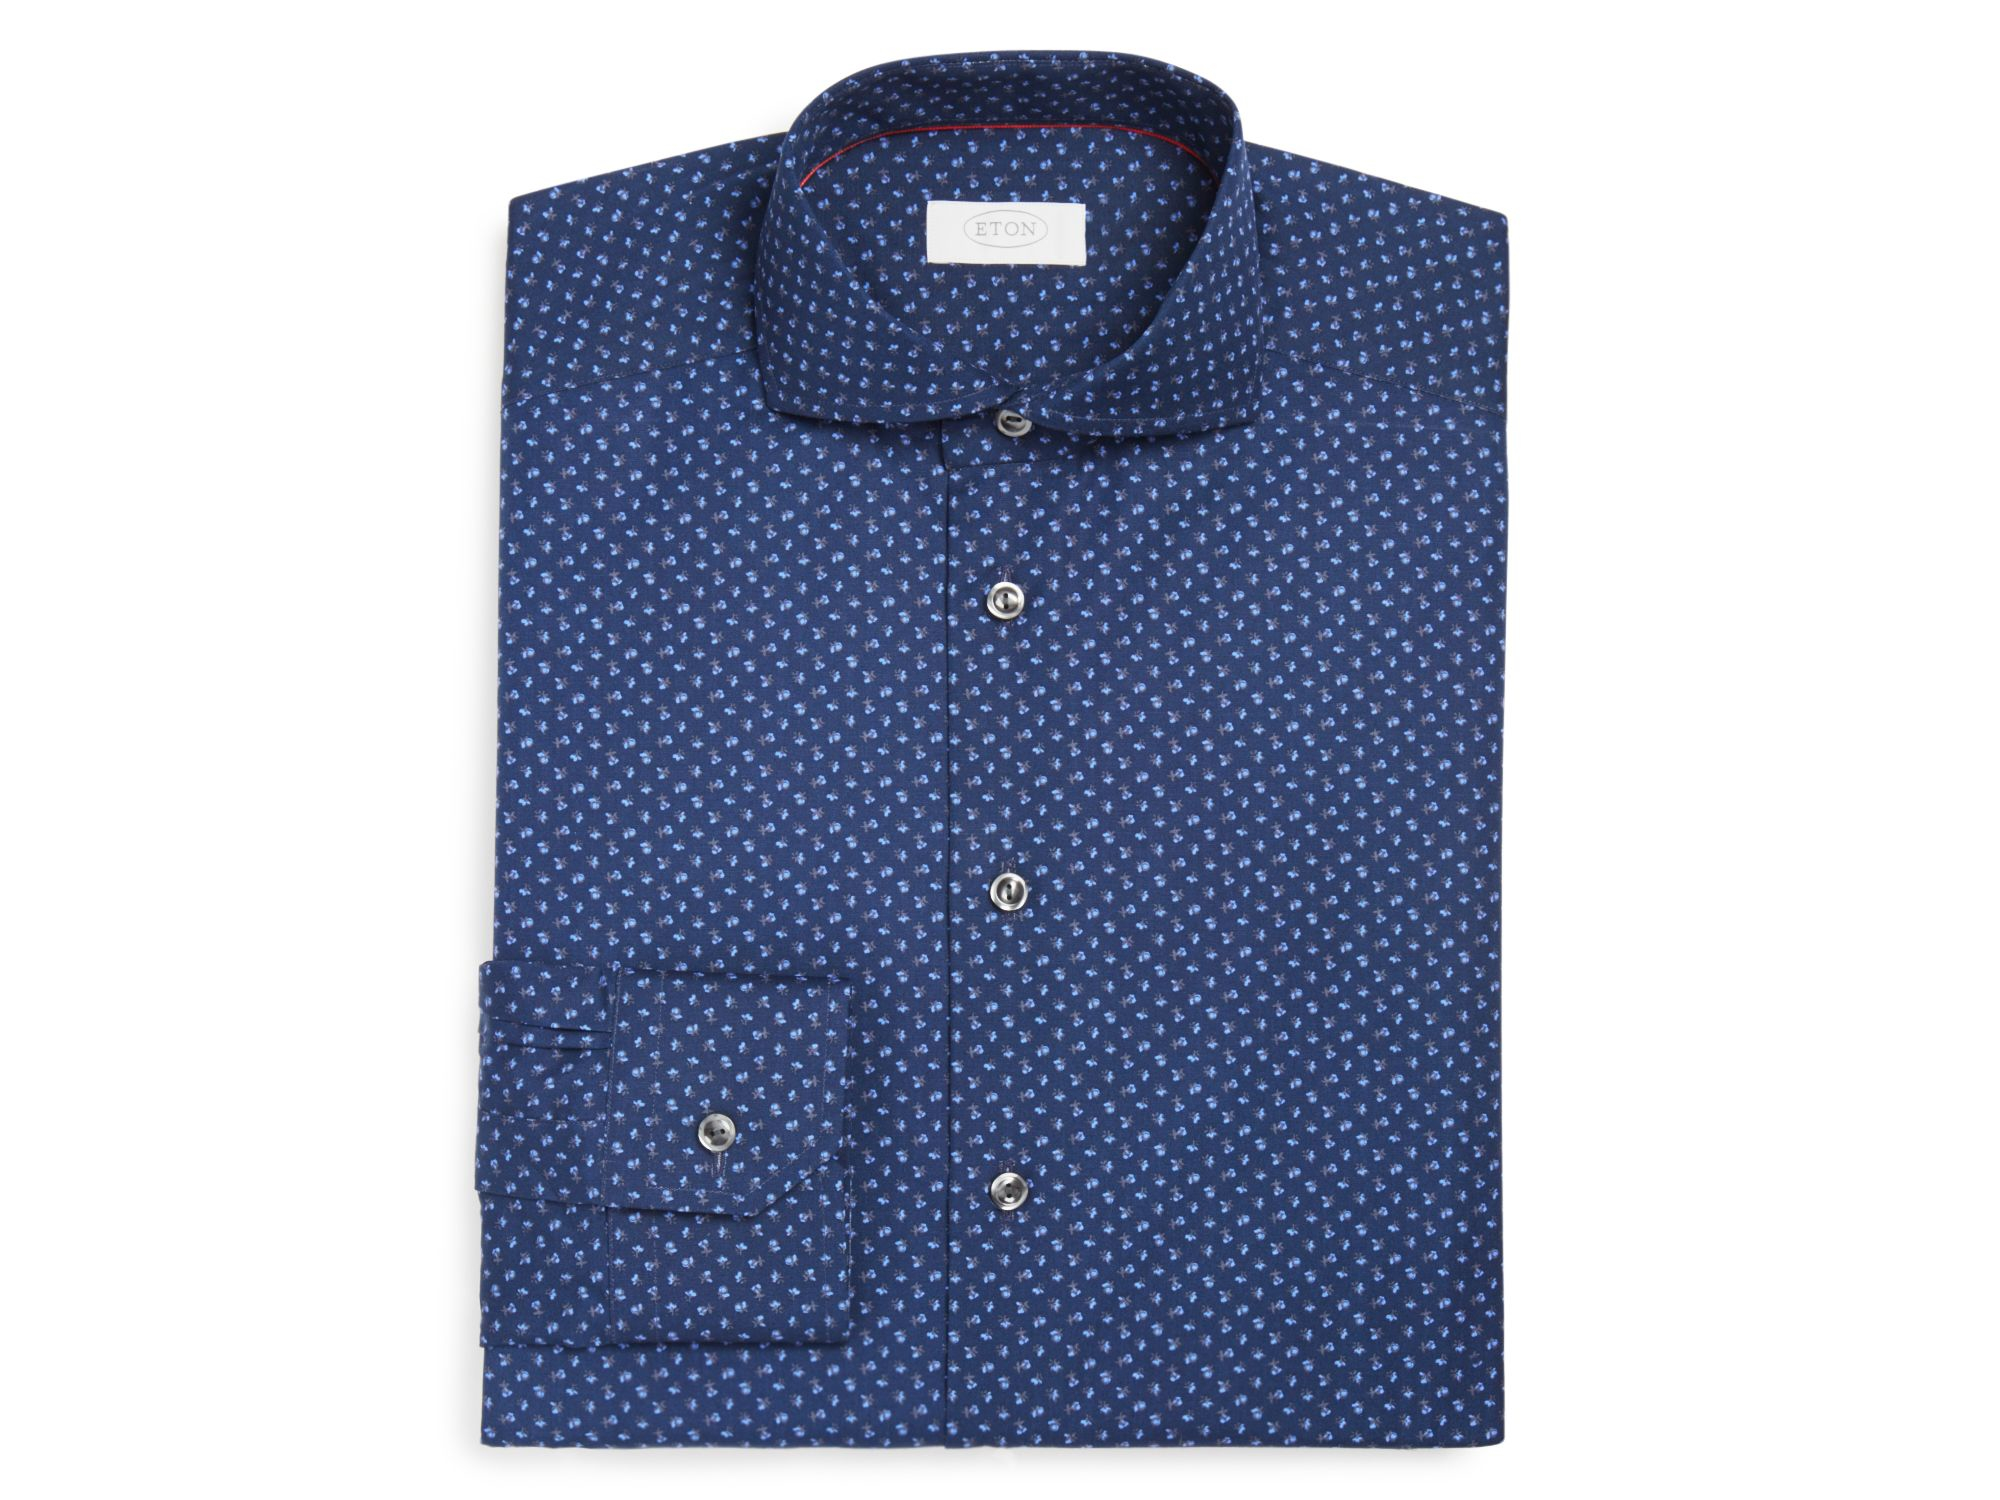 Lyst - Eton of sweden Flower Micro Print Slim Fit Dress Shirt in Blue